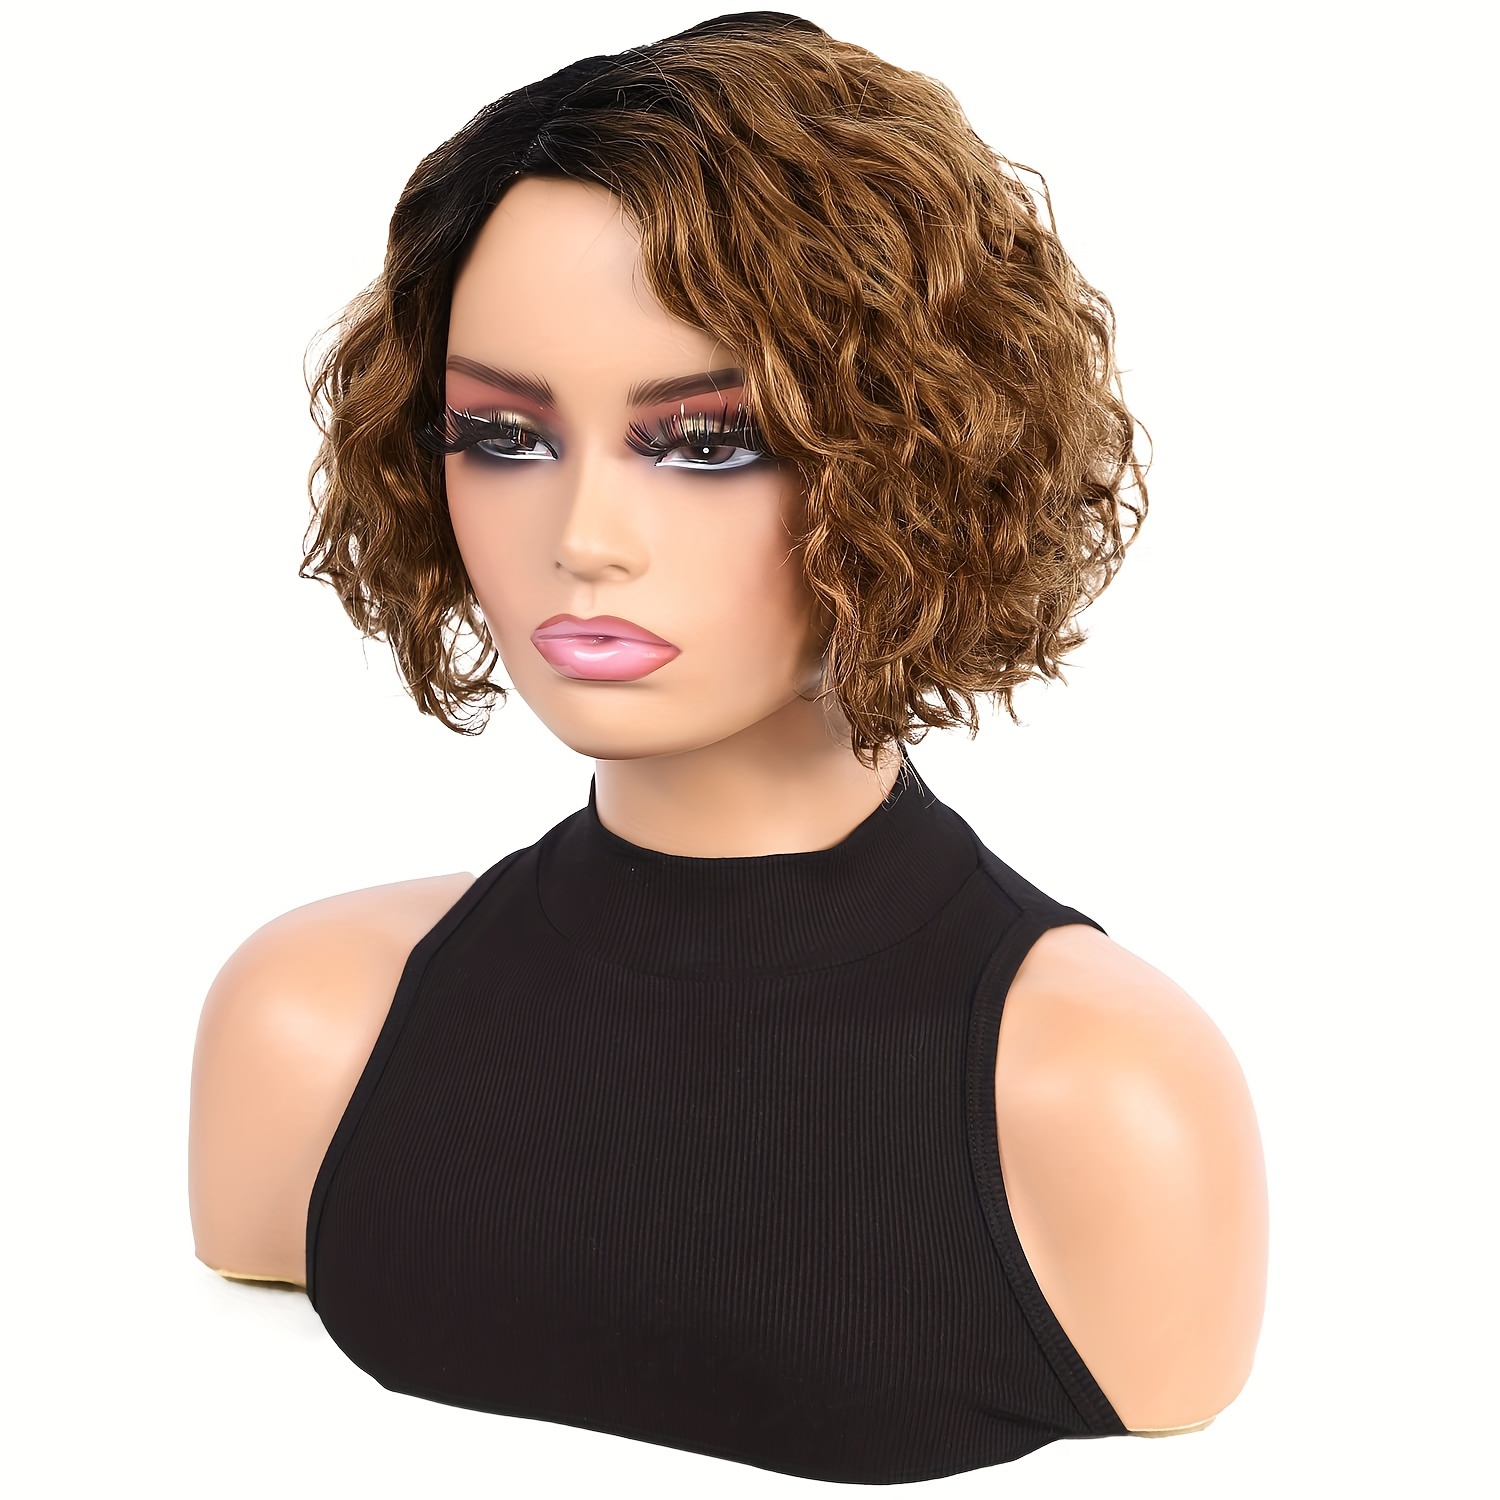 Brazilian Lace Front Human Hair Wigs Brown - Pixie Cut Wig Short